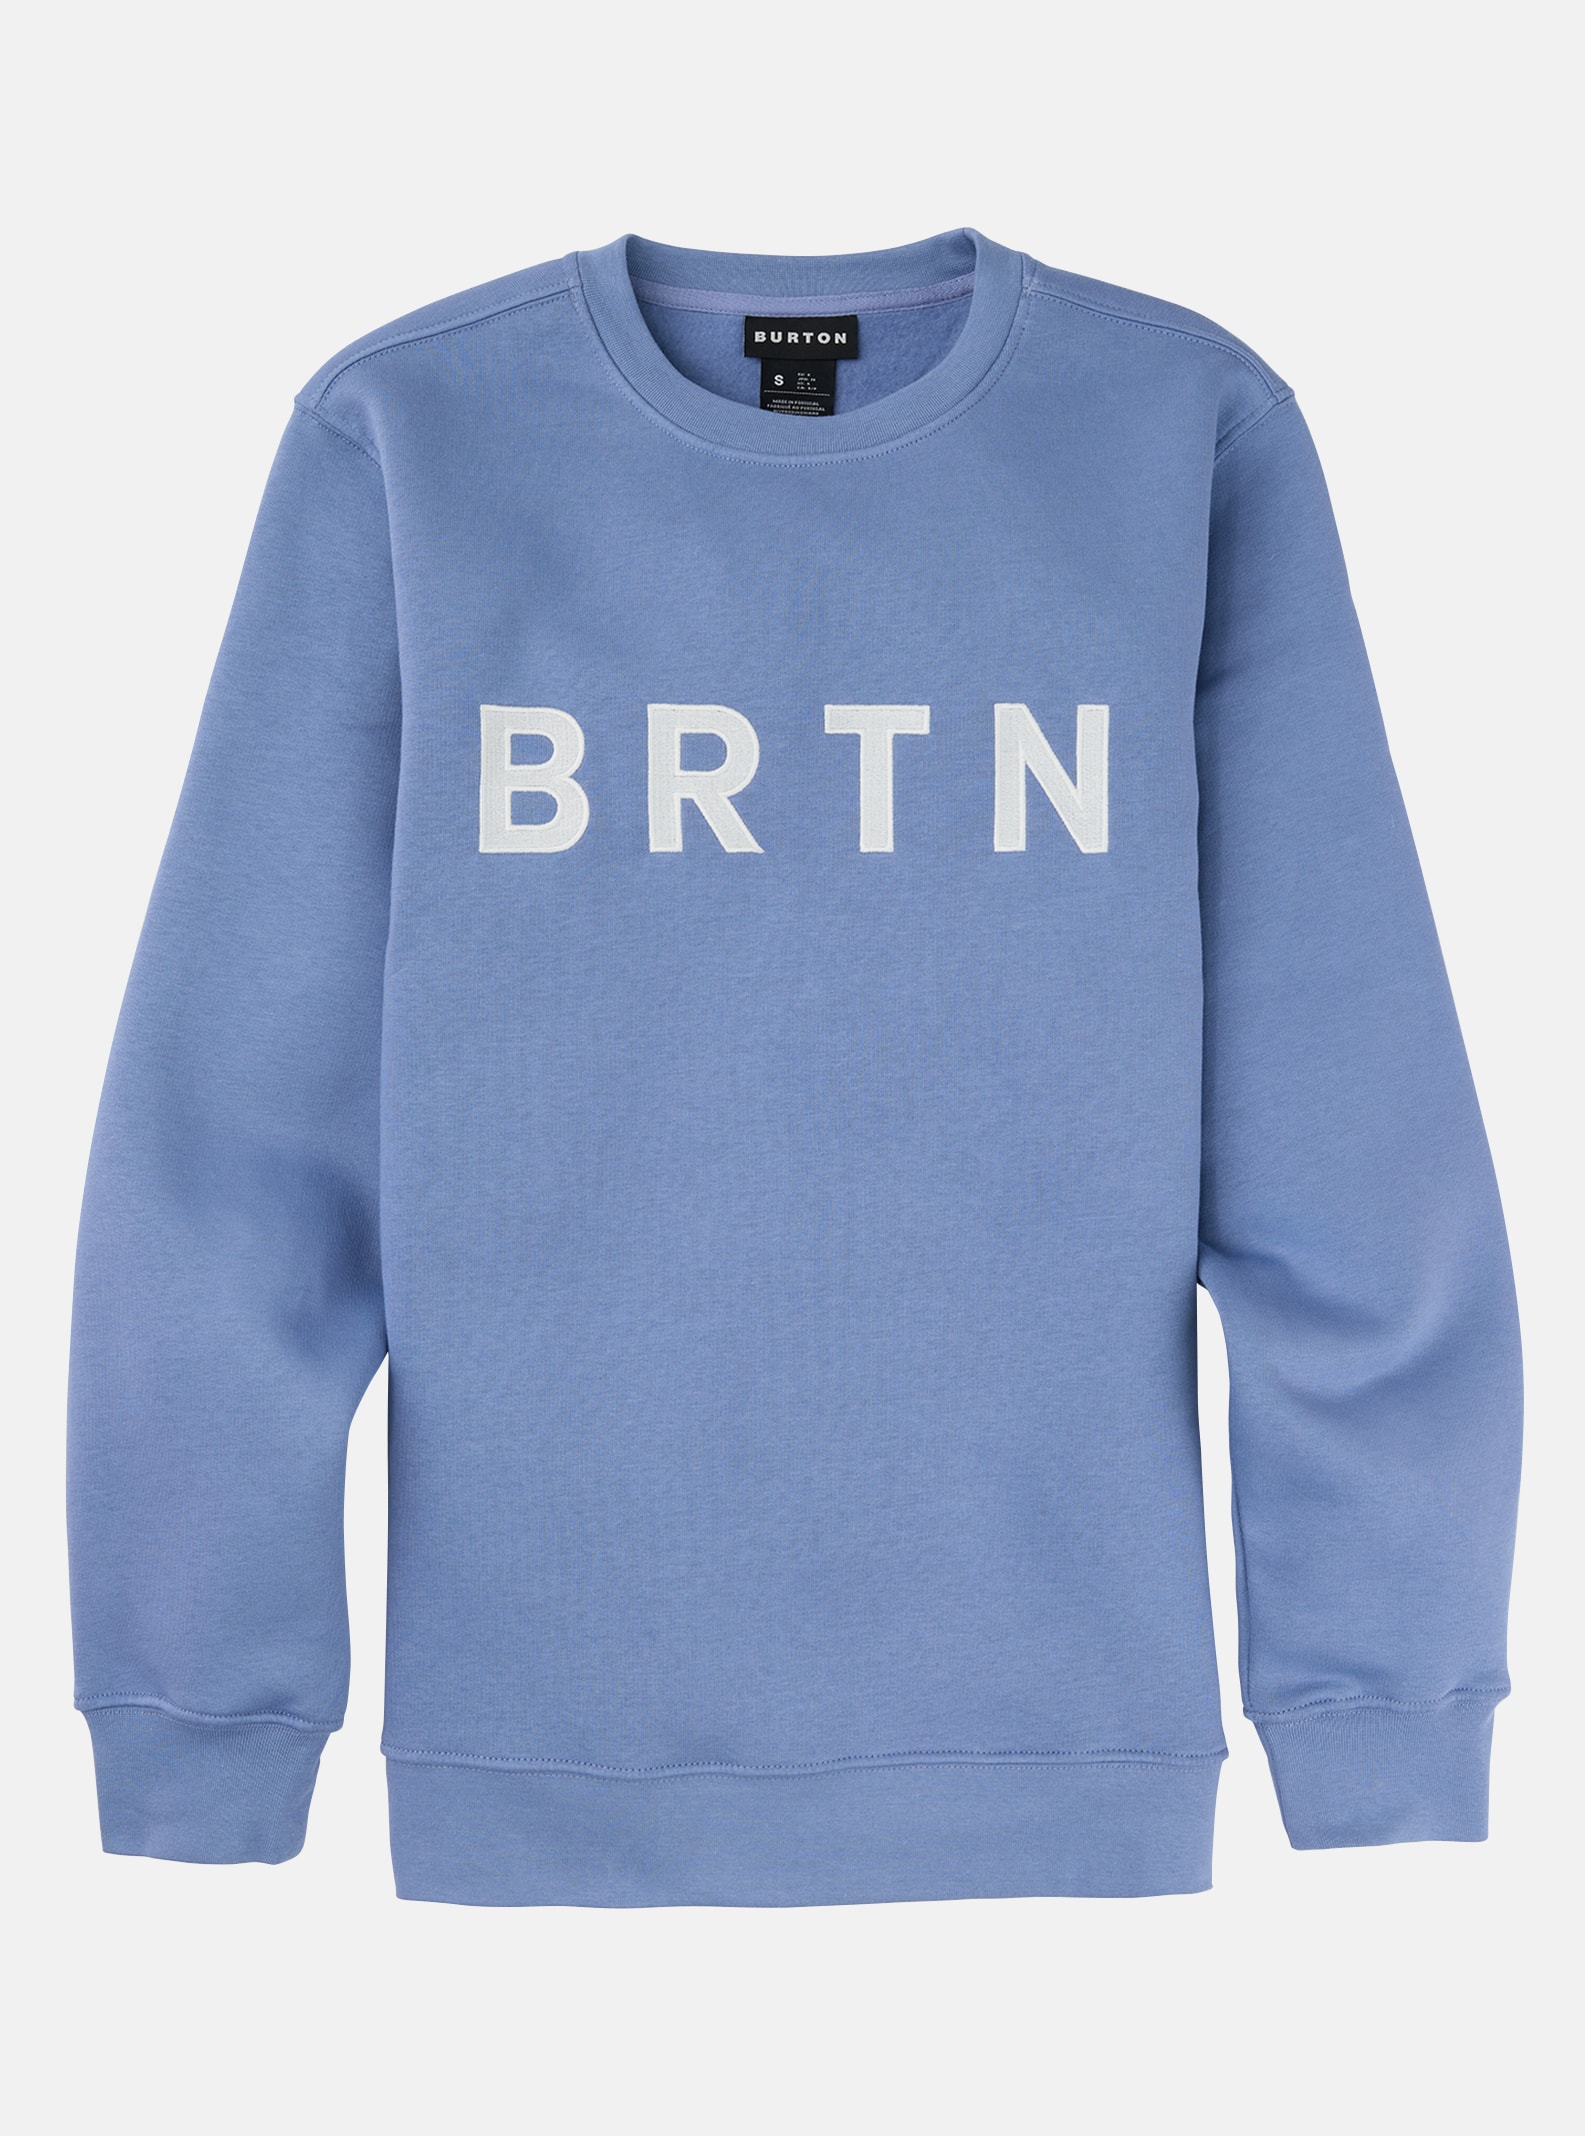 Burton Sweatshirt - BRTN Crewneck, Slate Blue, M